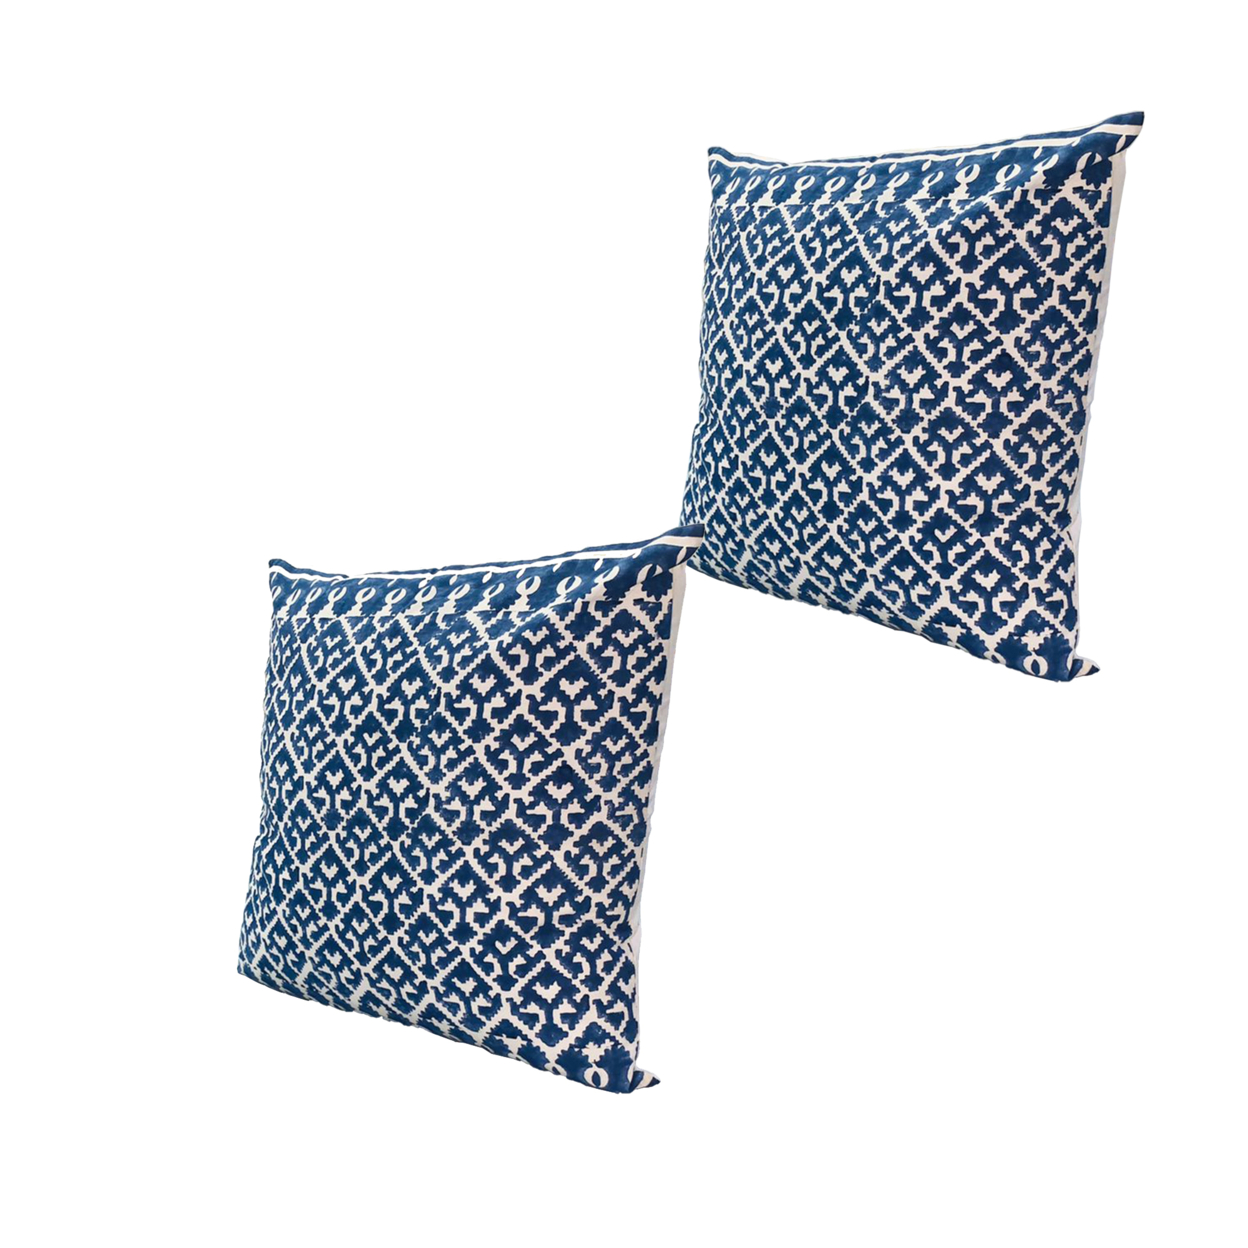 18 X 18 Square Accent Pillows, Trellis Pattern, Cotton Cover, Set Of 2, Blue, White